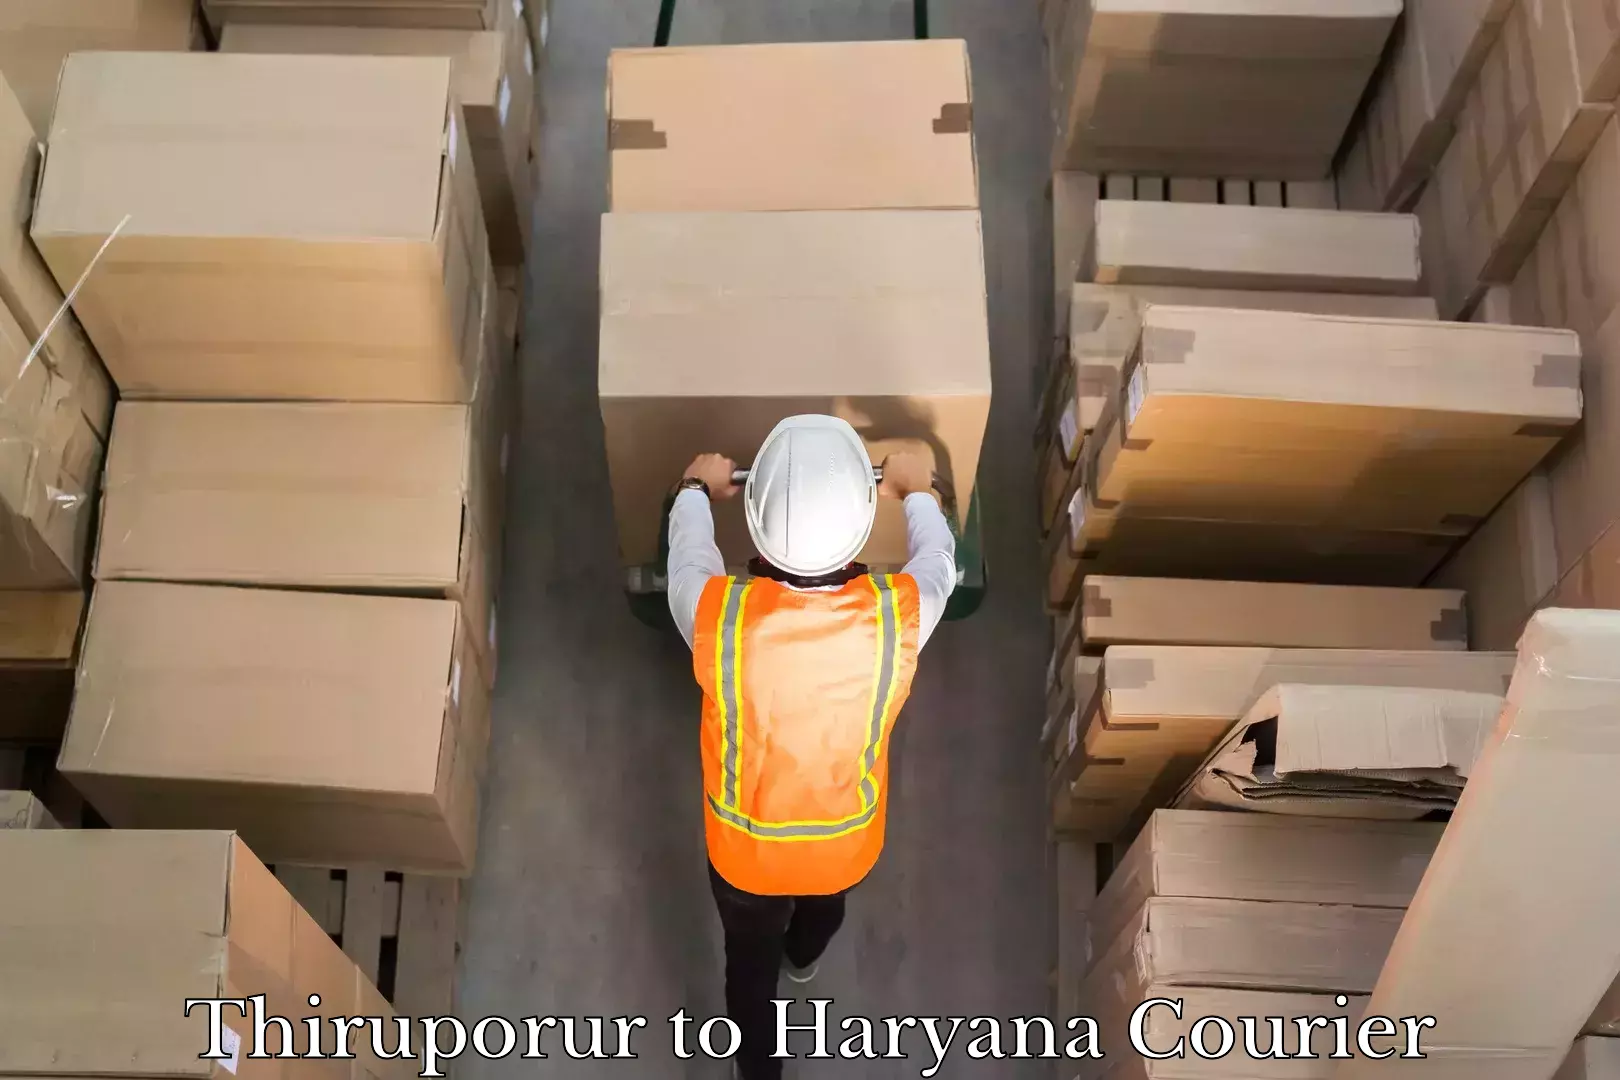 Logistics service provider Thiruporur to Haryana